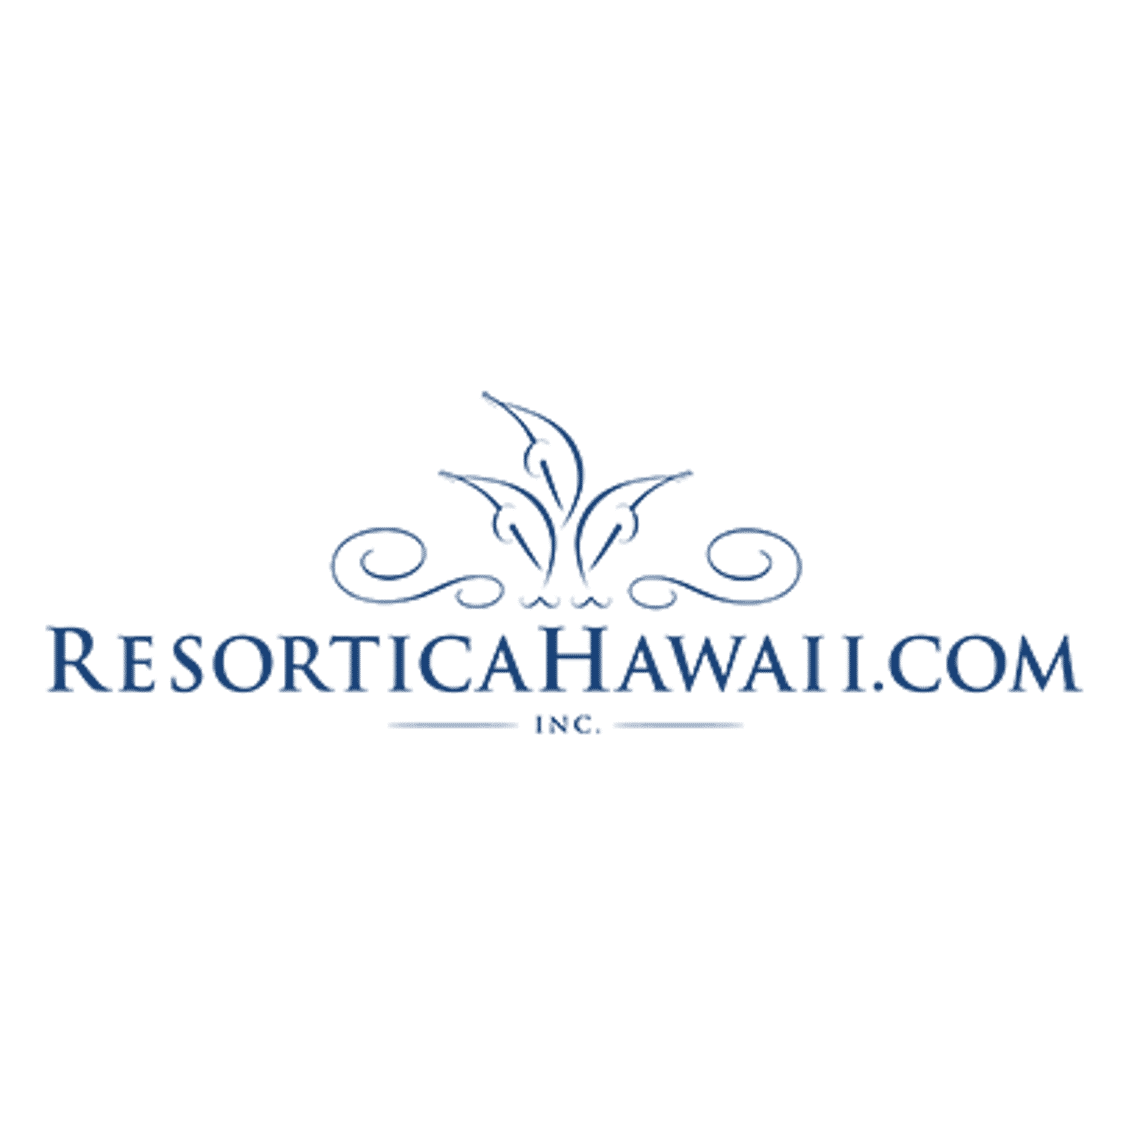 Resortica Hawaii